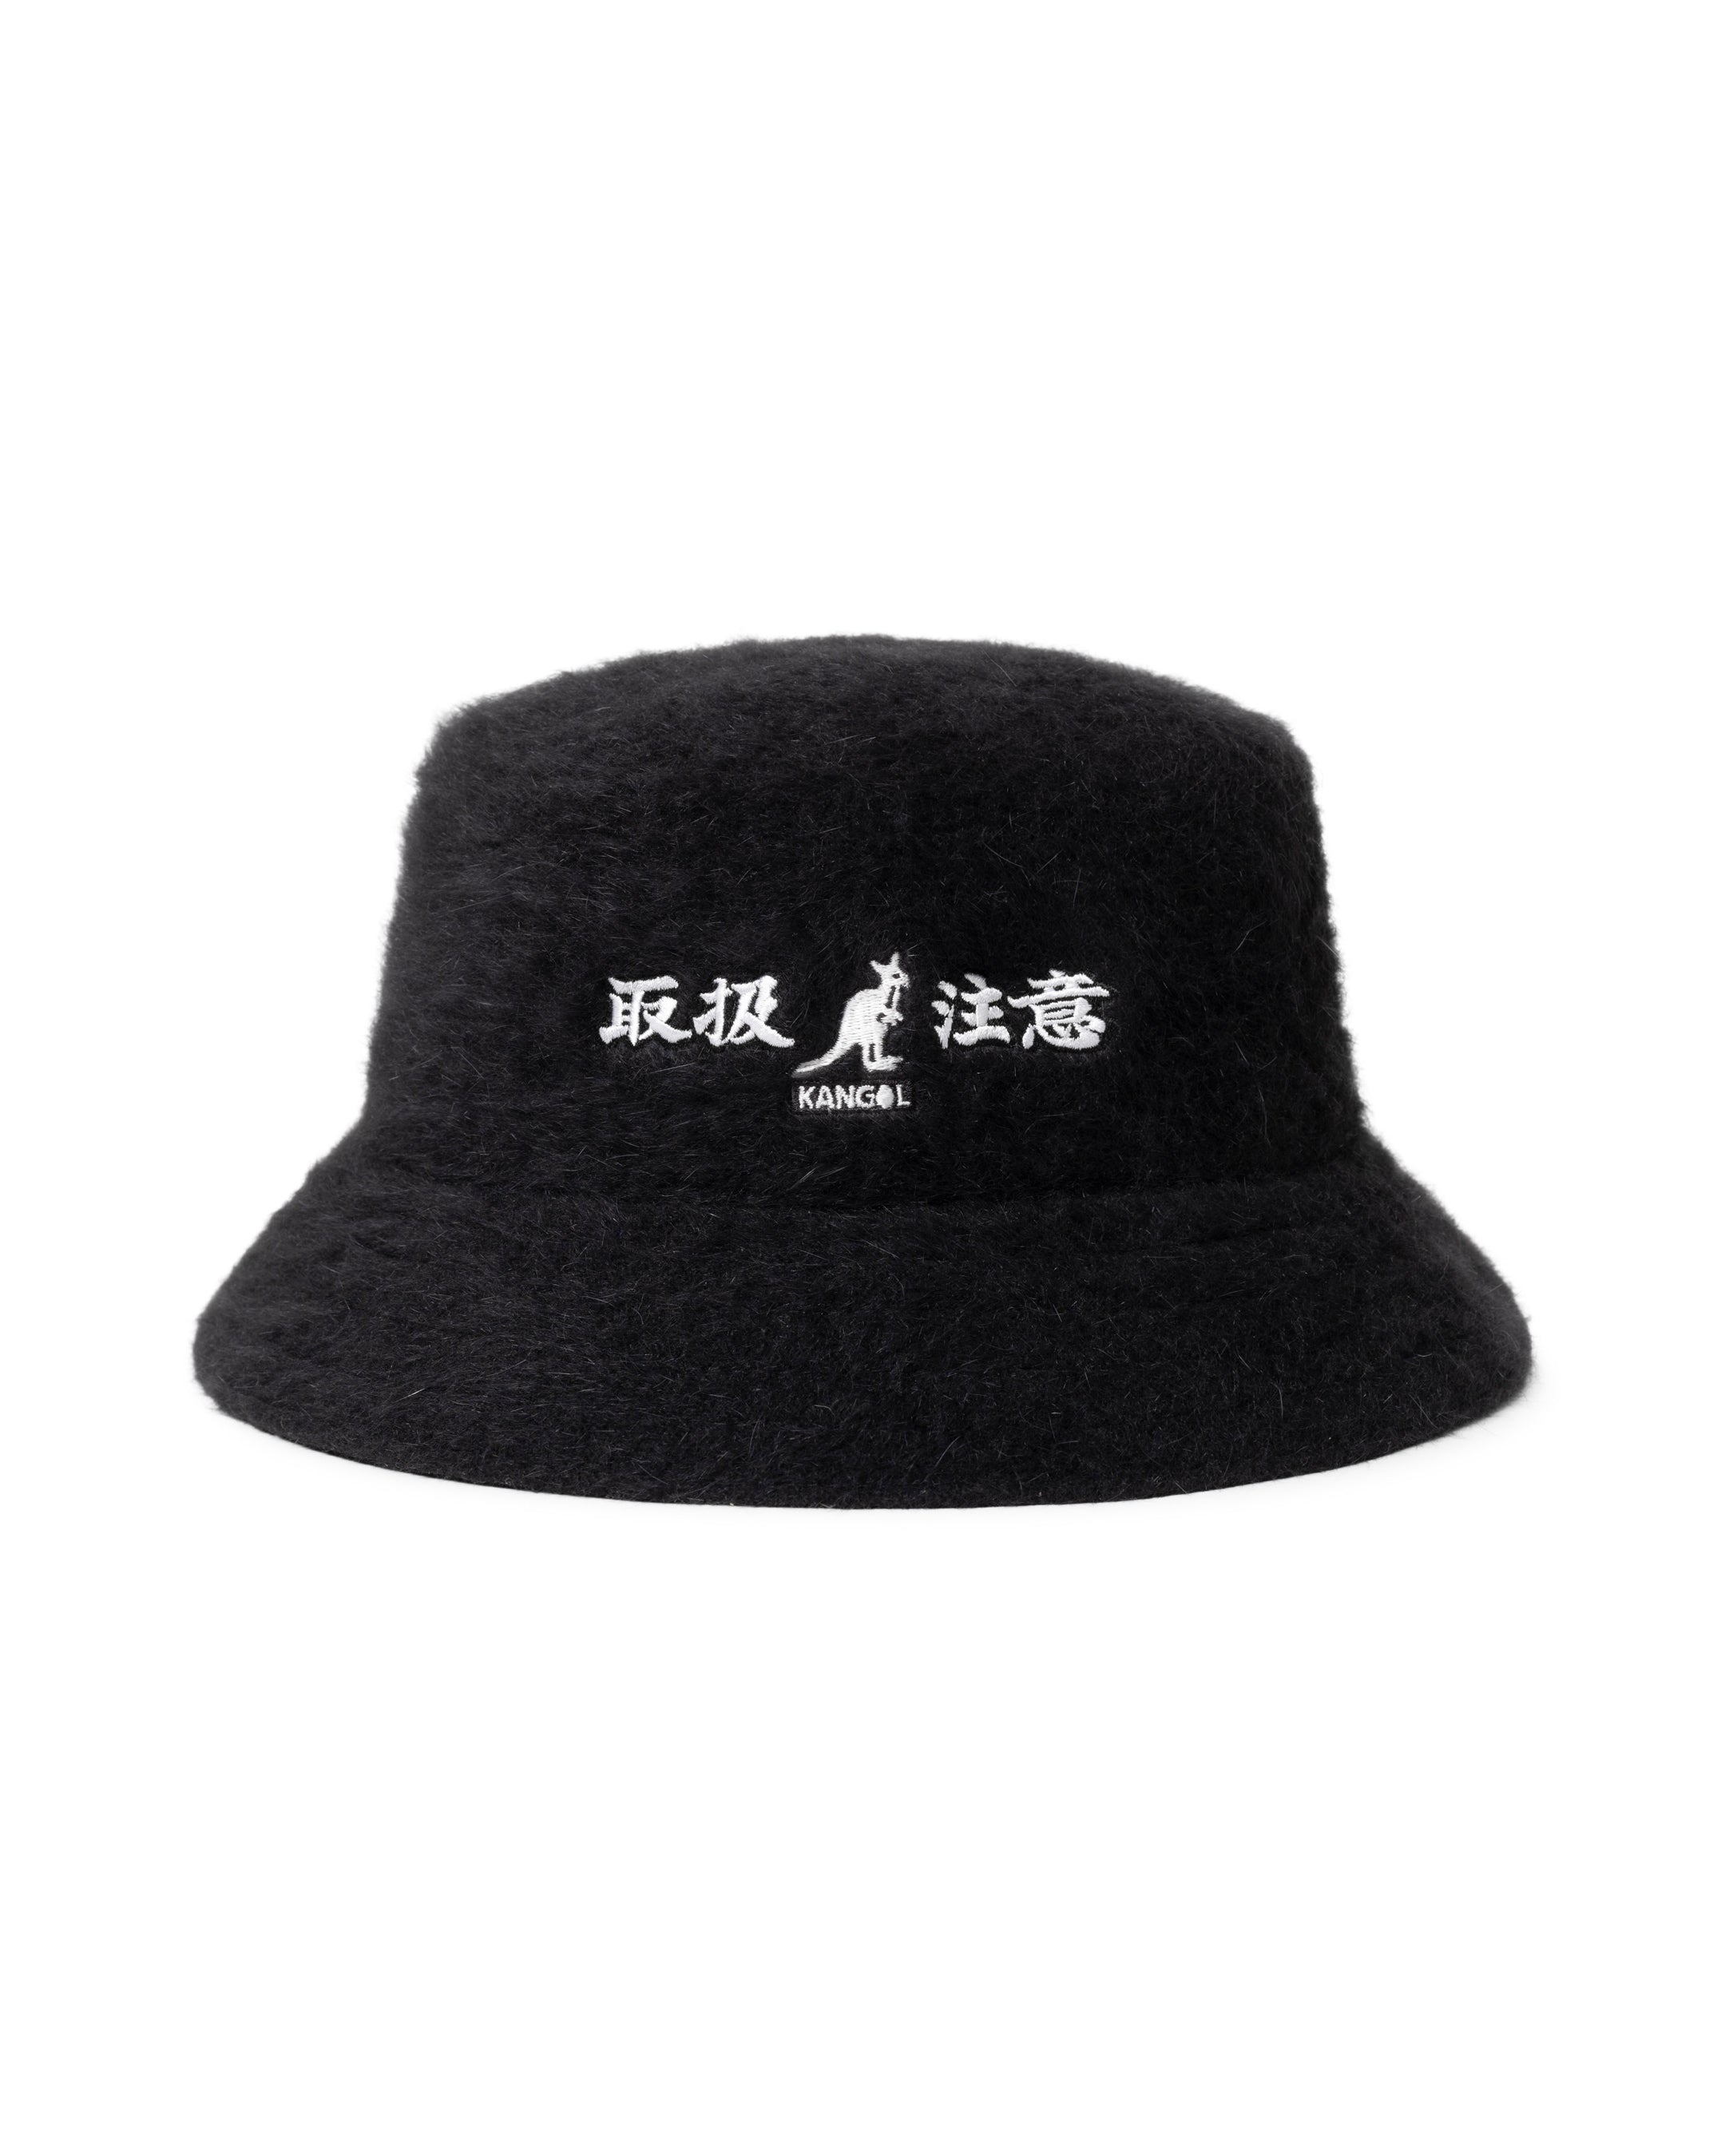 HATS – BlackEyePatch